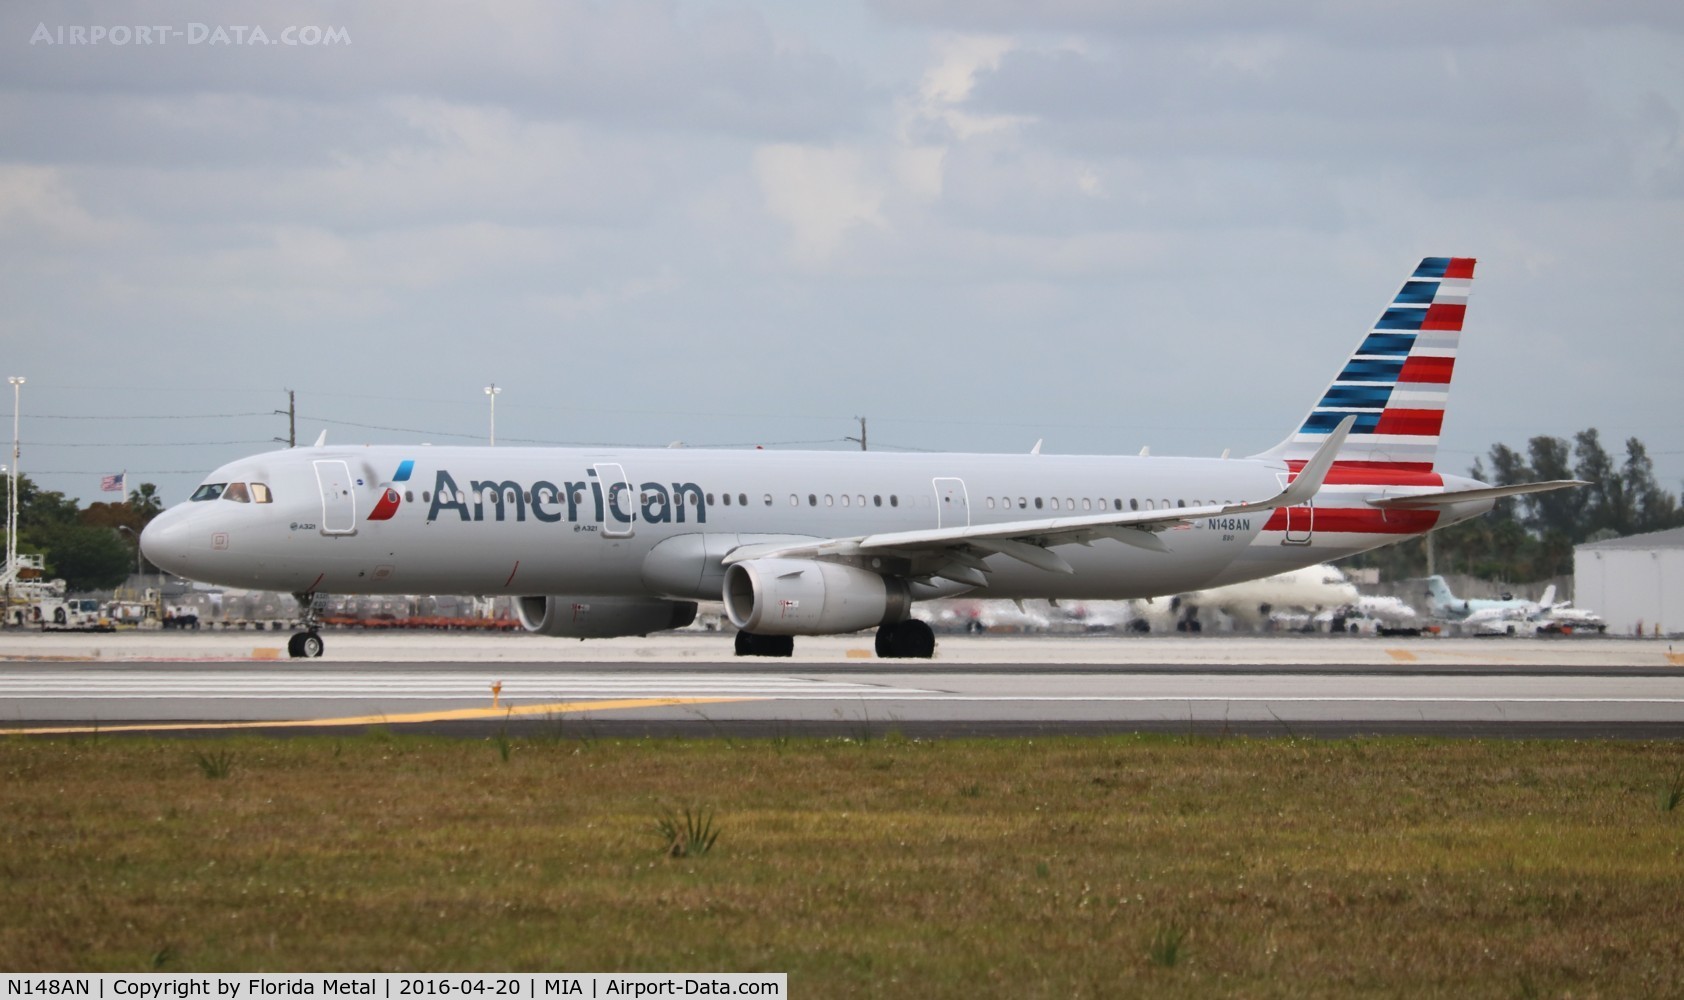 N148AN, 2015 Airbus A321-231 C/N 6790, American